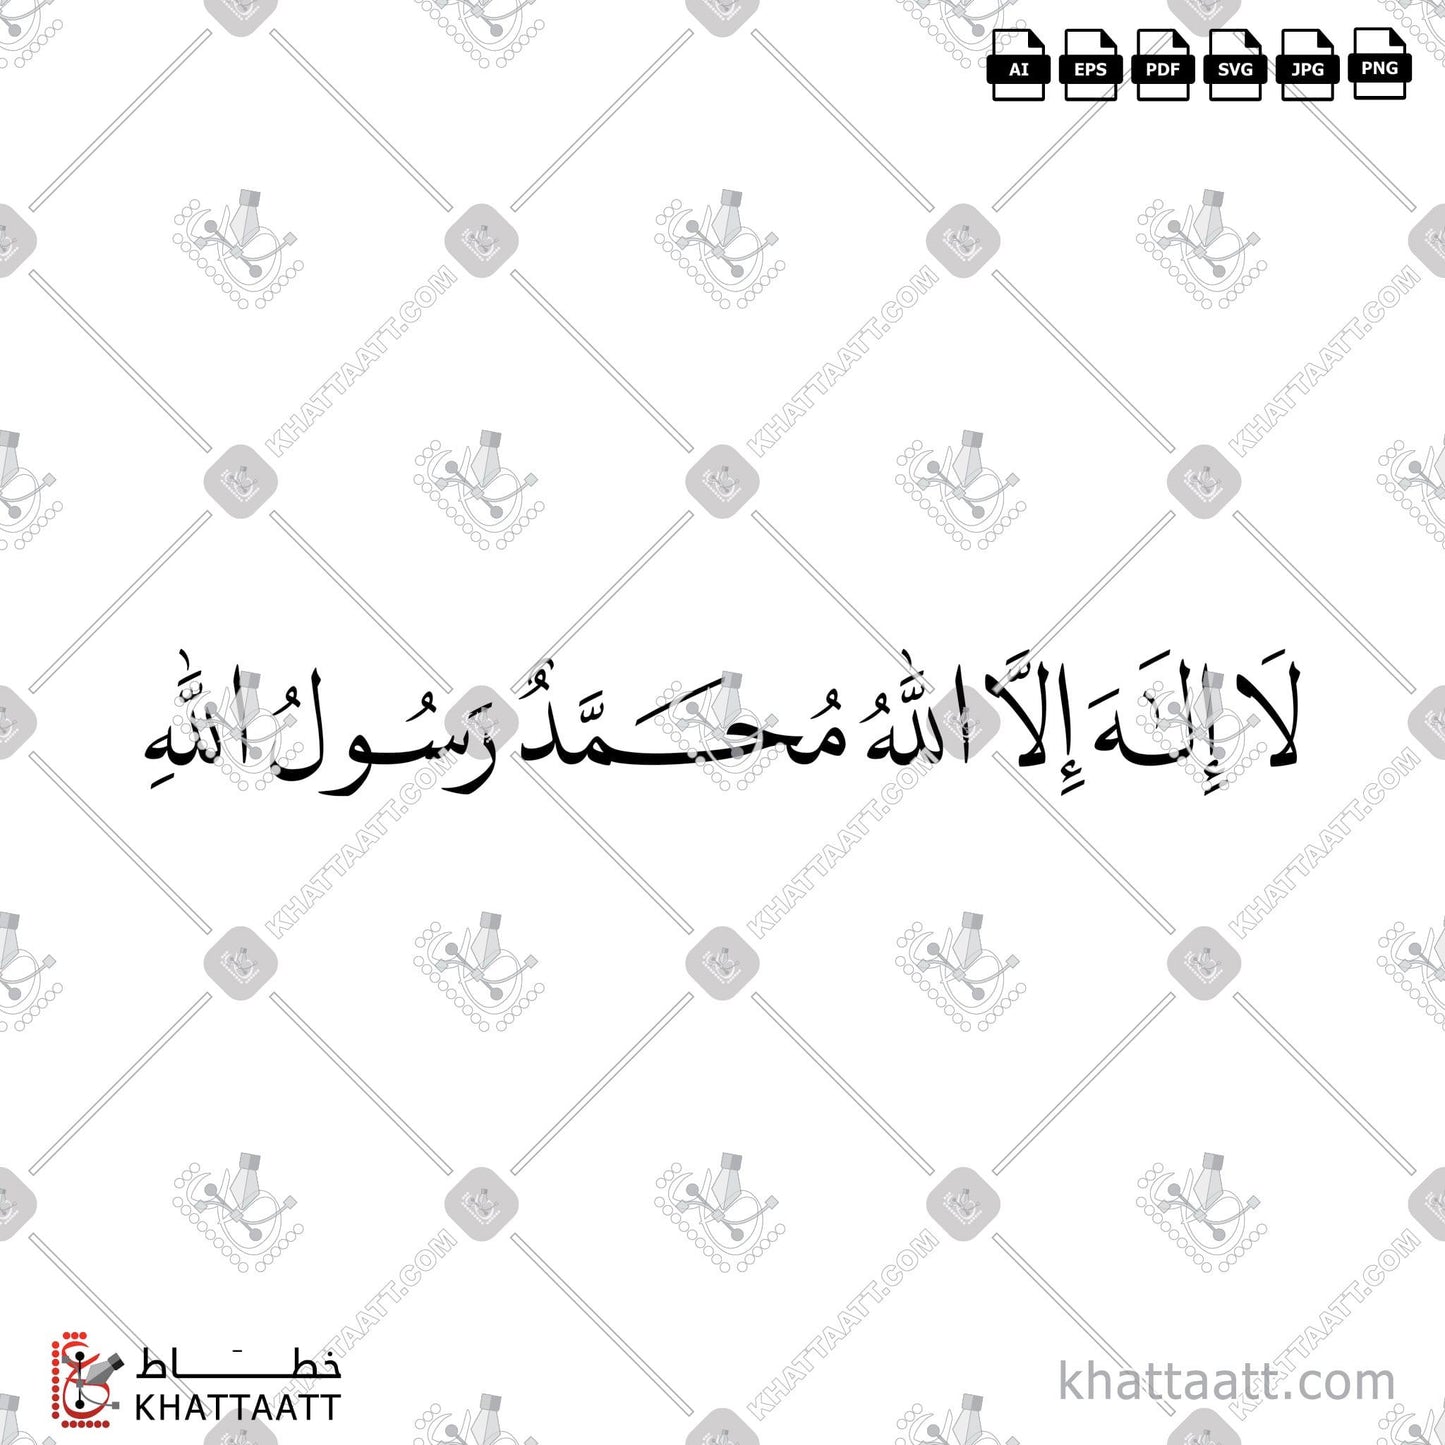 Download Arabic Calligraphy of لا إله إلا الله محمد رسول الله in Naskh - خط النسخ in vector and .png